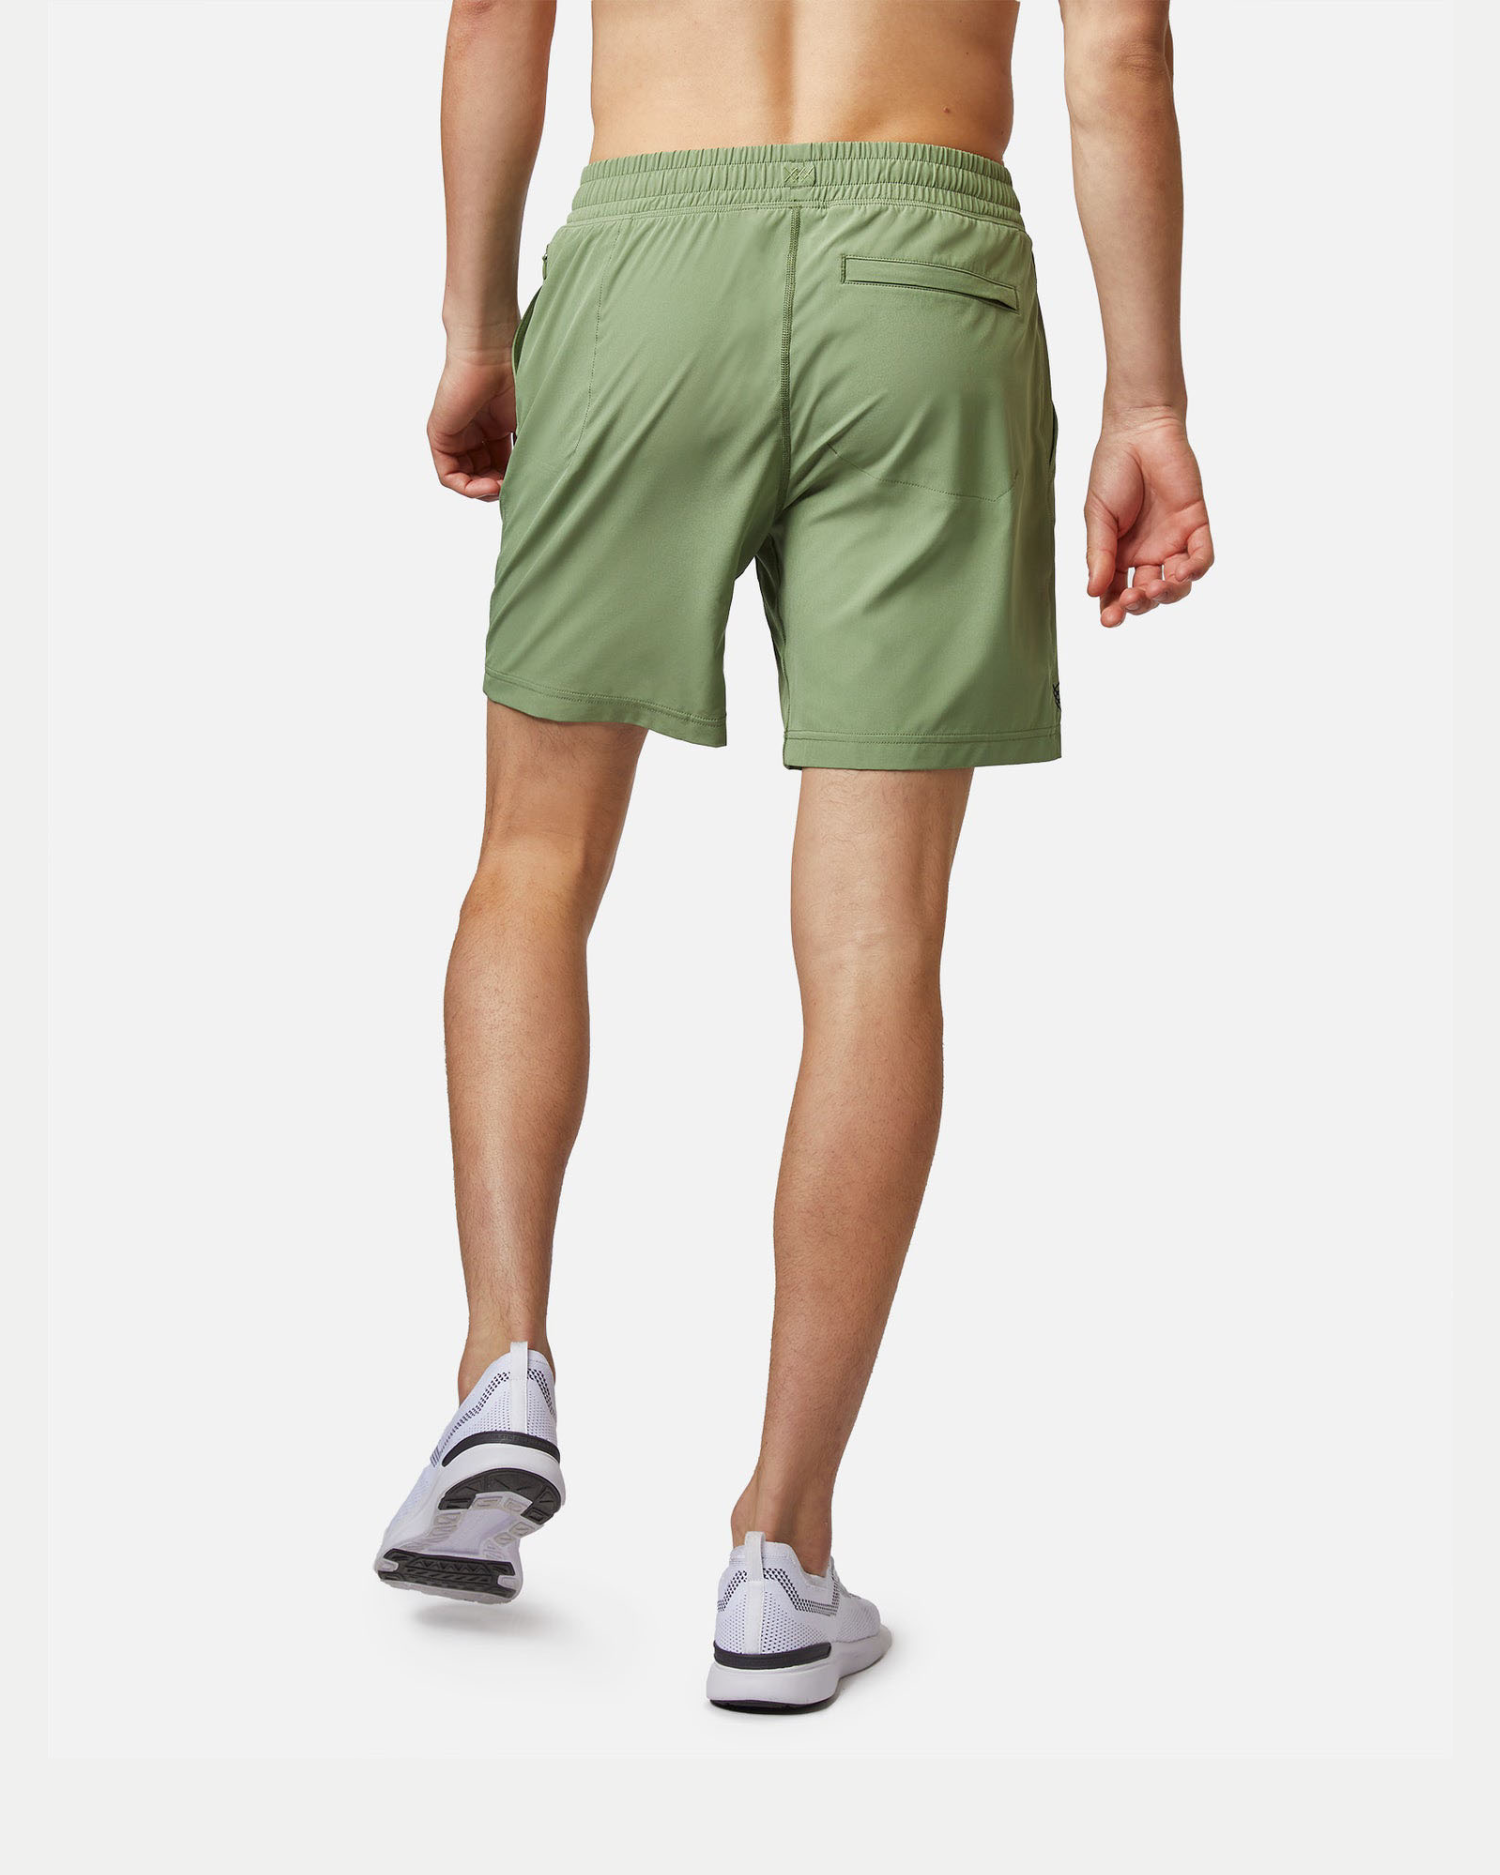 Men's Rhone Essentials Training Shorts, Unlined